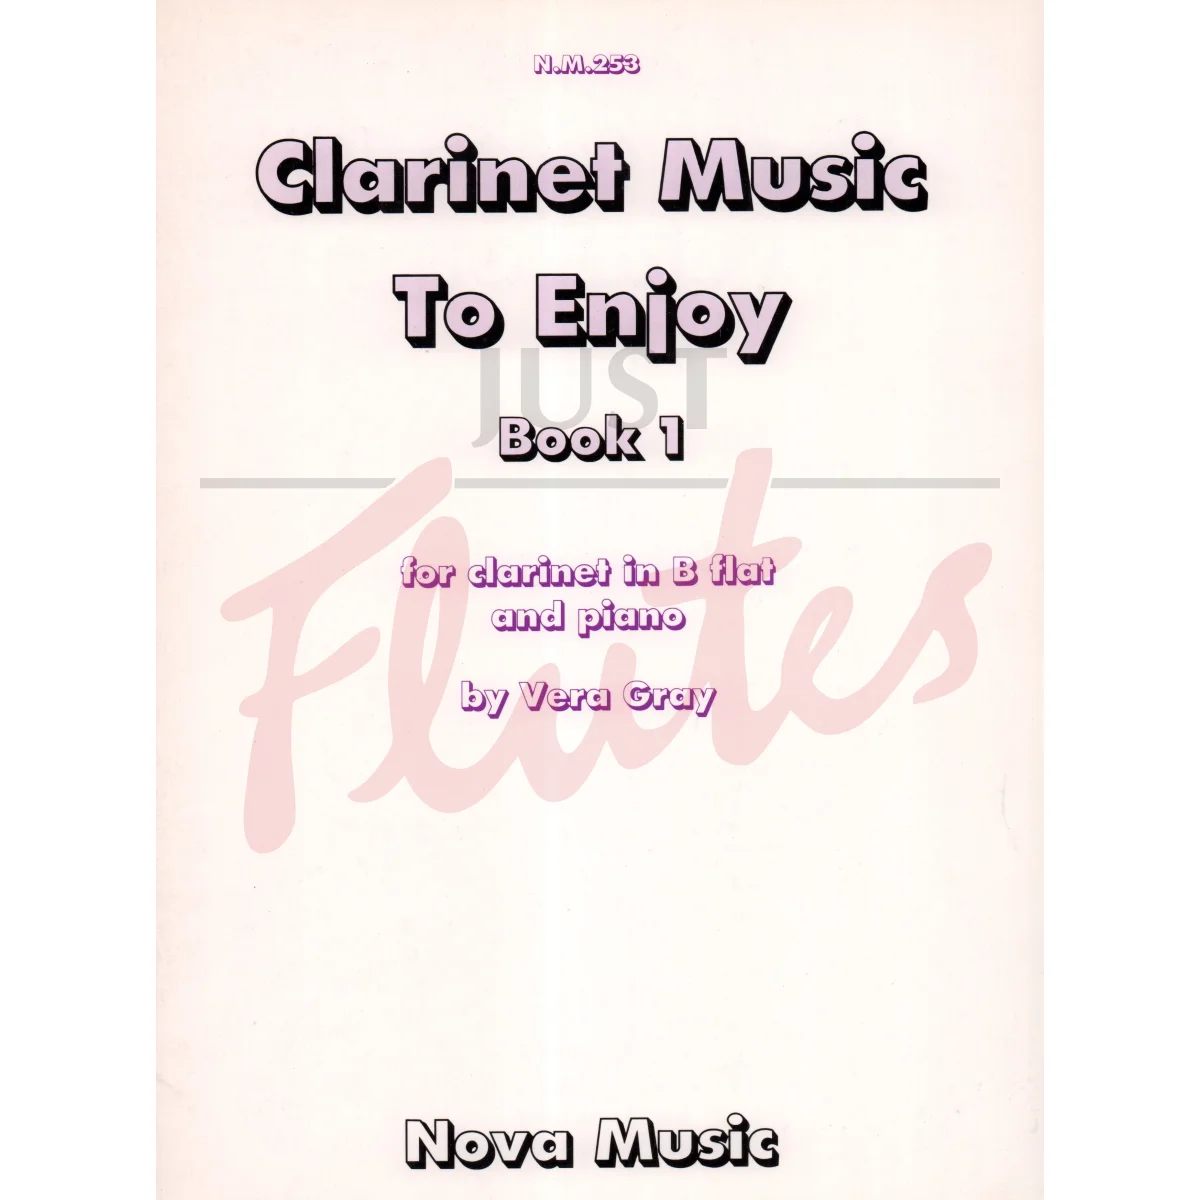 Clarinet Music to Enjoy Book 1